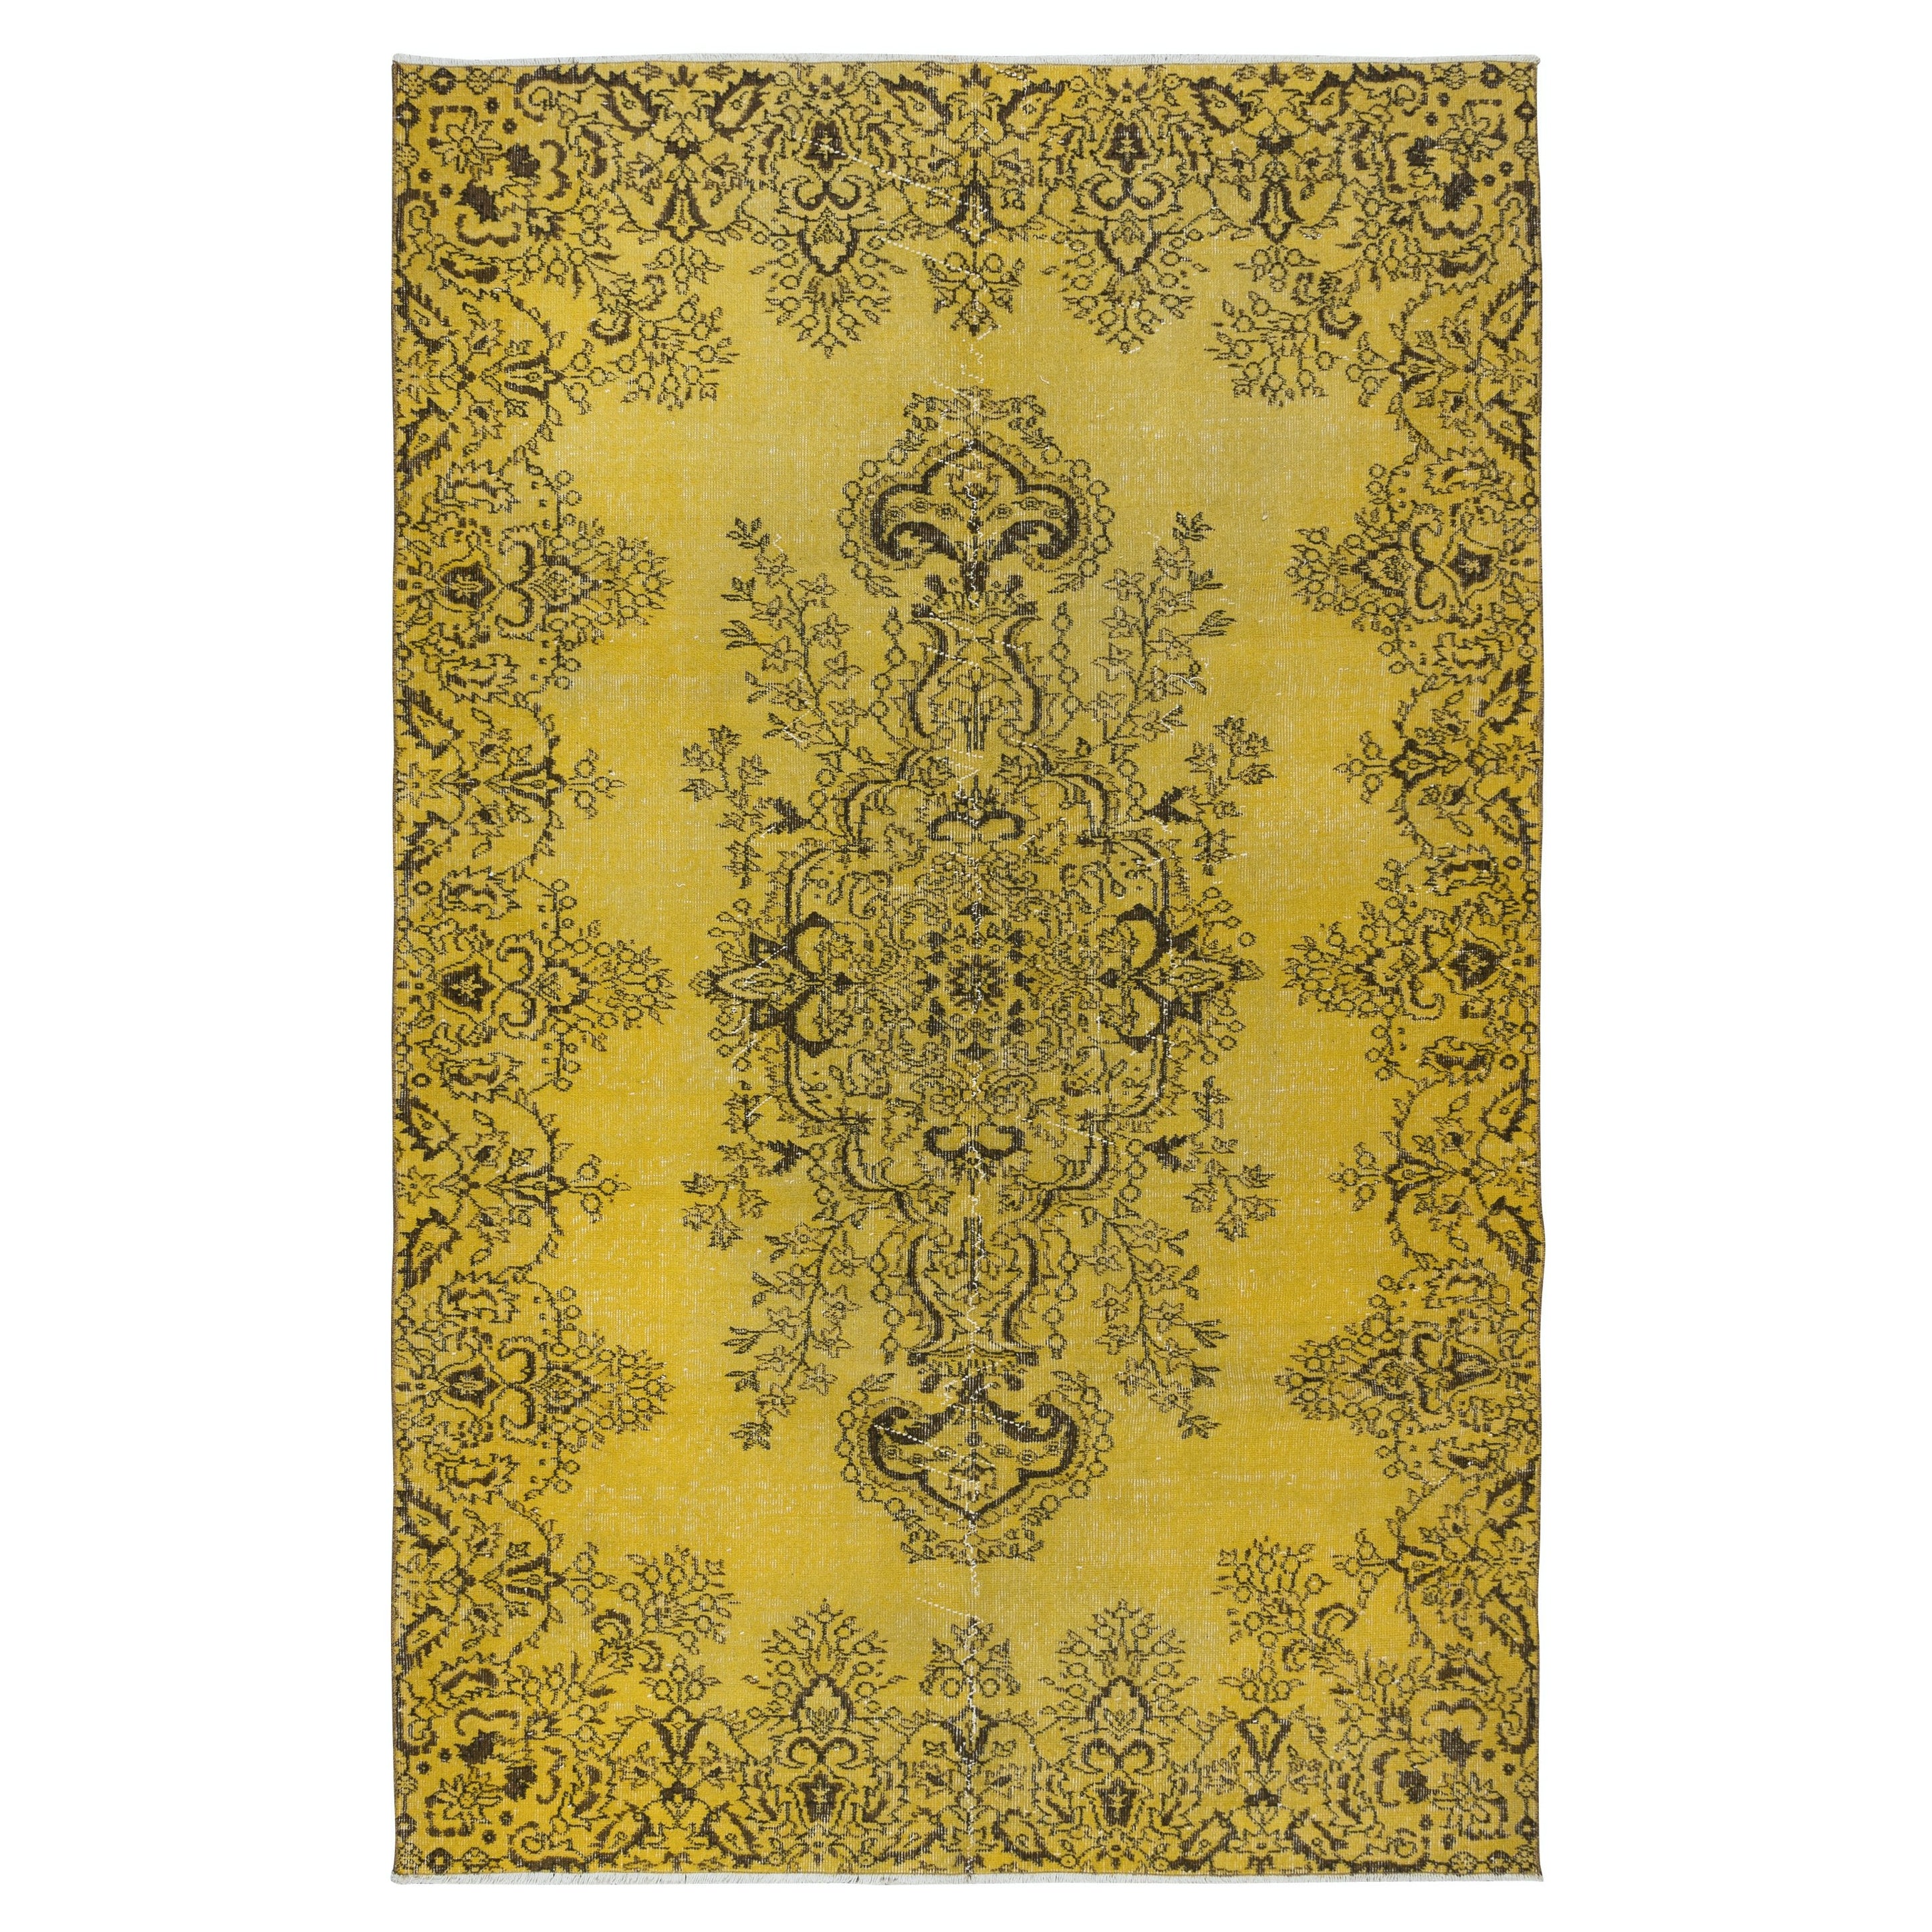 6x9.5 Ft Yellow Handmade Area Rug for Modern Interiors, Vintage Turkish Carpet (tapis turc vintage)